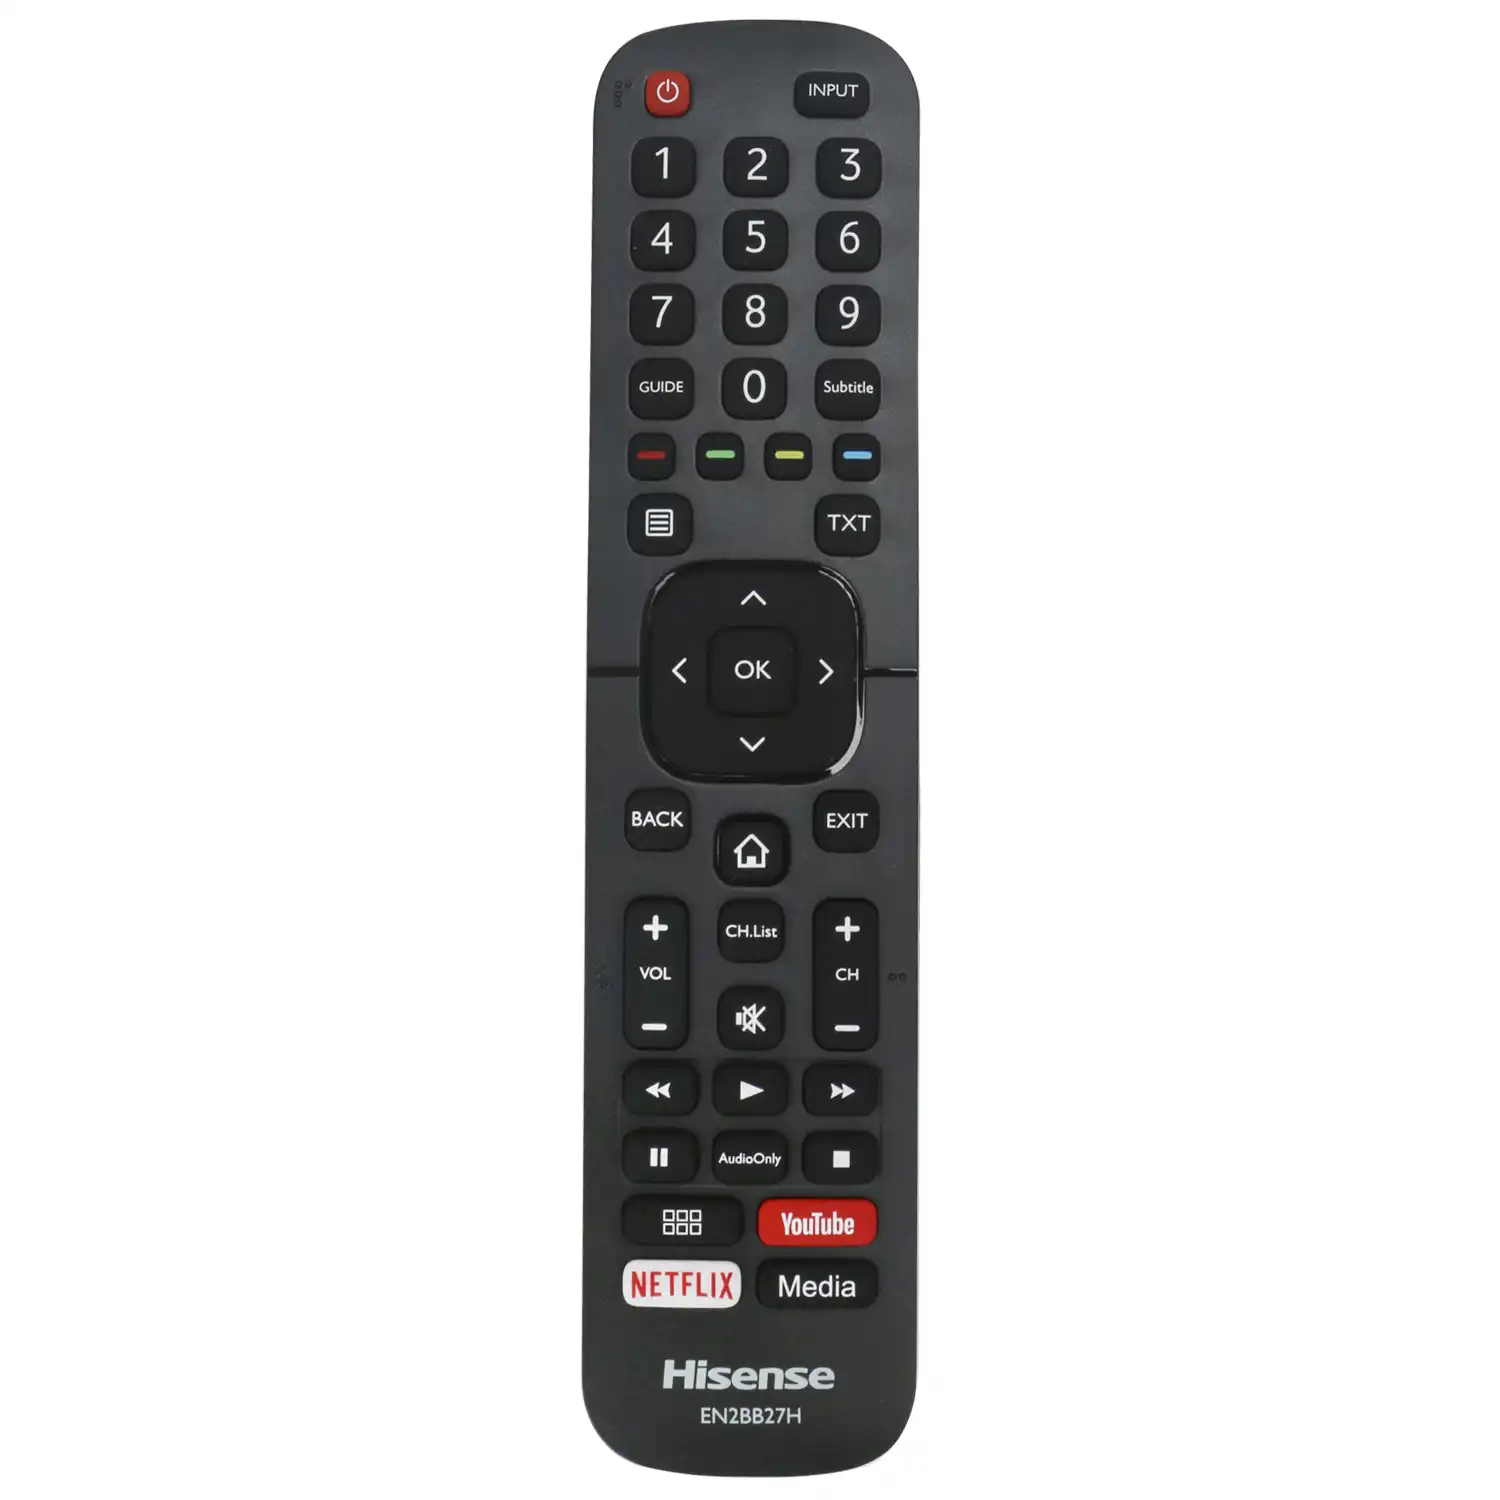 Hisense New Tv Remote Control En2bb27h For Lcd Led Tv H39a5600 H32a5600 H55a6100 H50a6100 H65a6100 H43a5600 H43a6100 Remote Controls Aliexpress